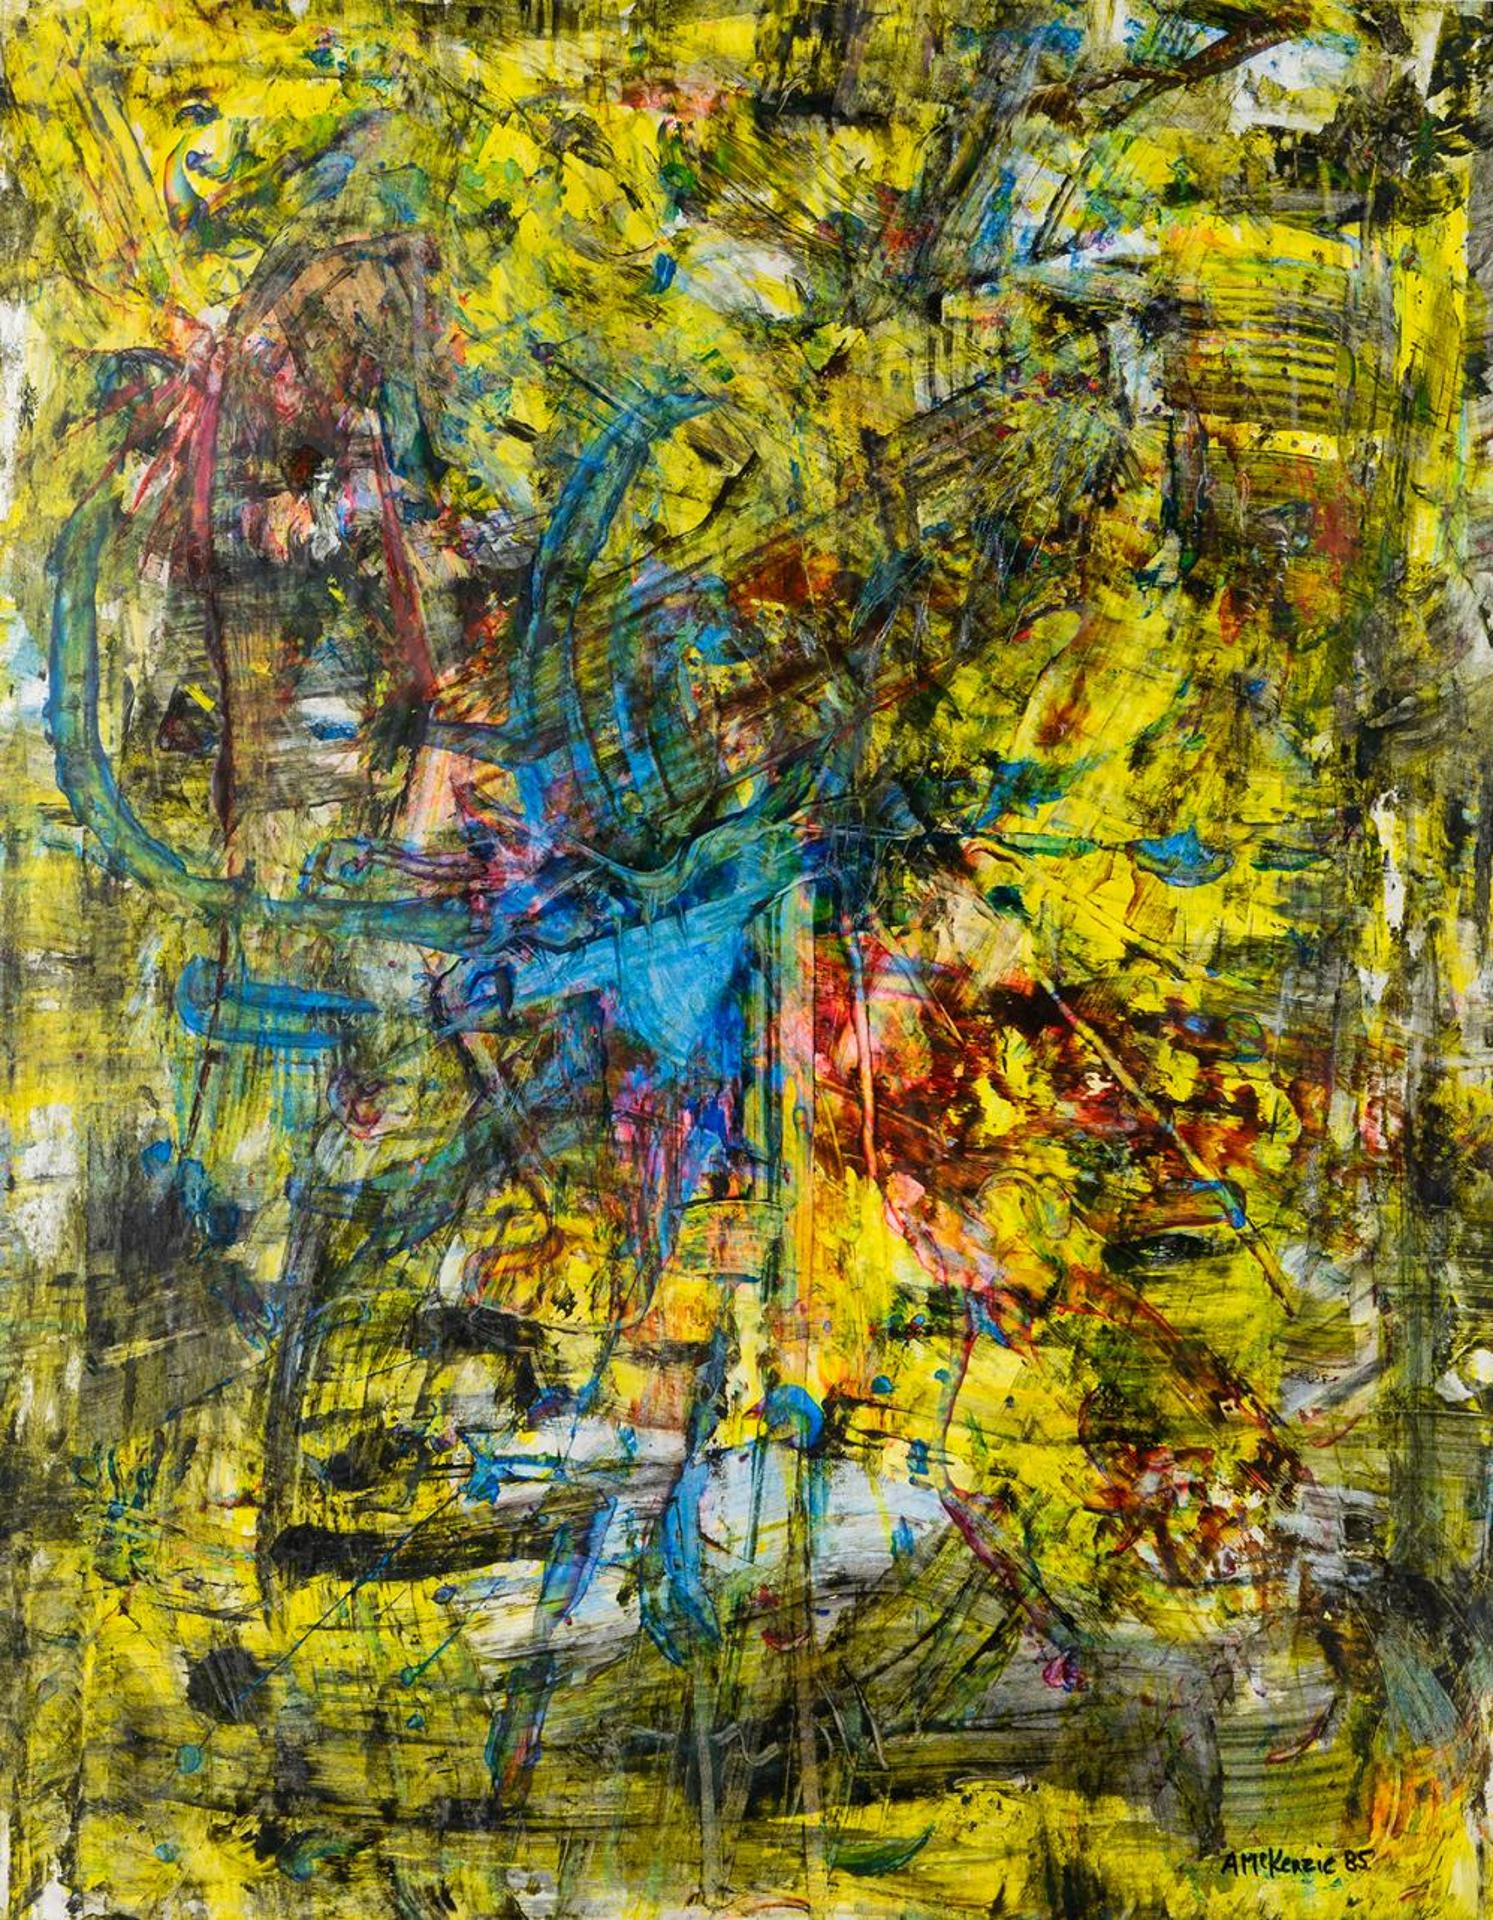 Arnold McKenzie - Painting #6 - After Kandinsky